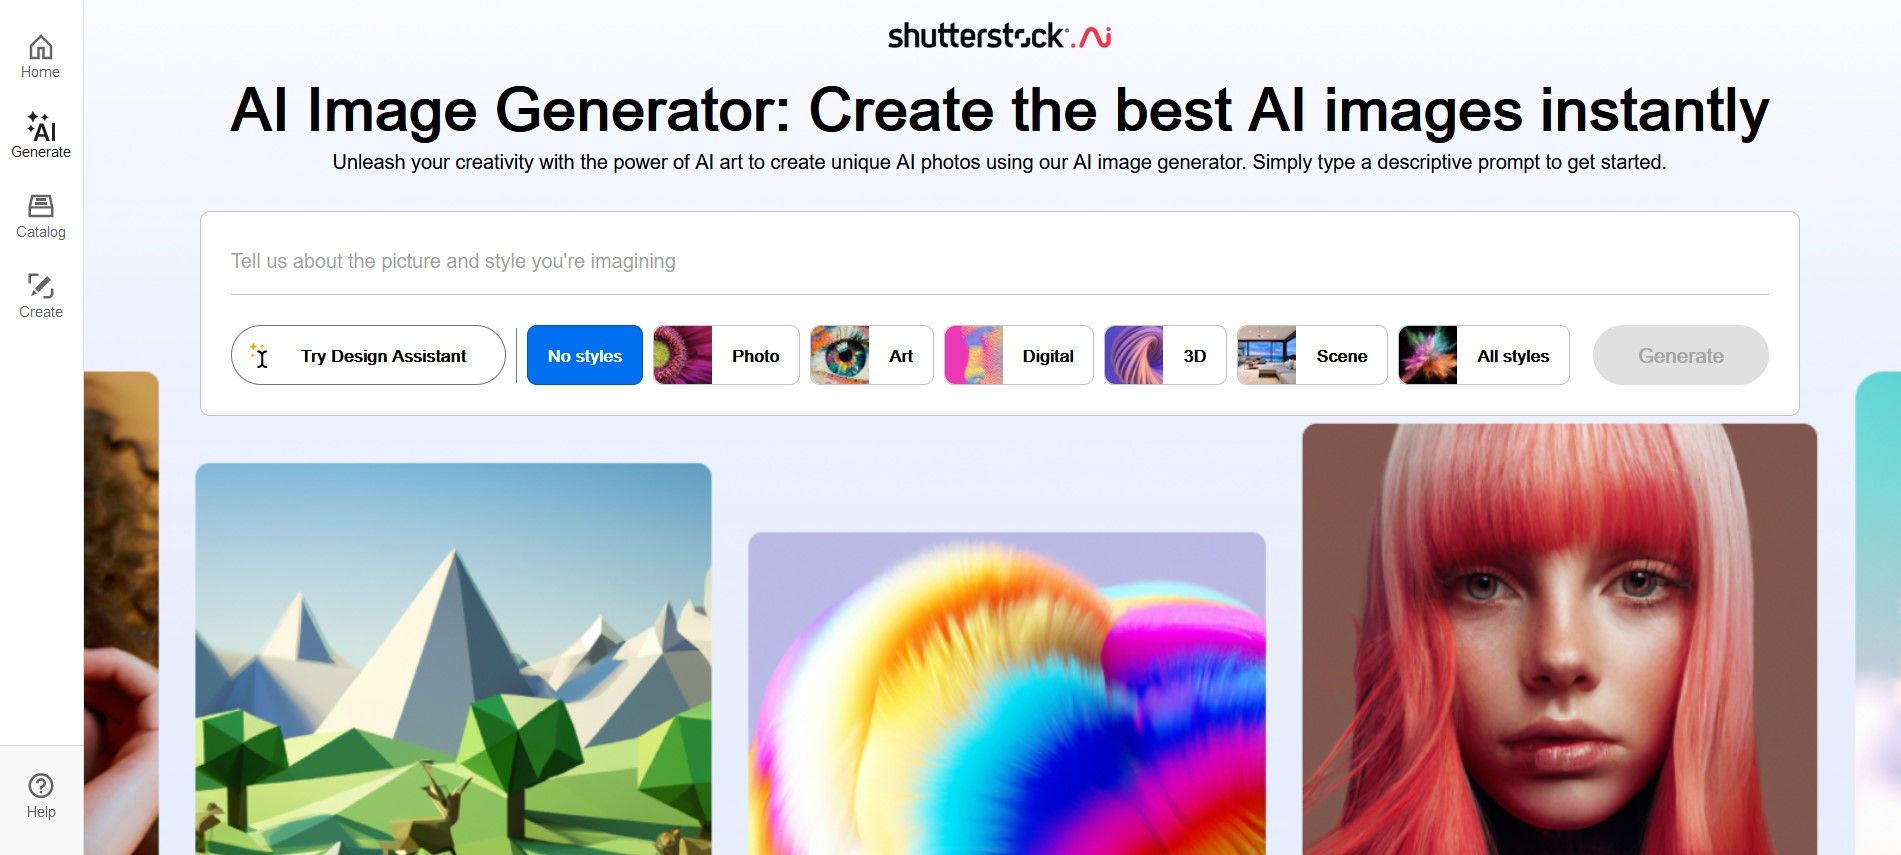 Shutterstock Ethical AI Art Generator